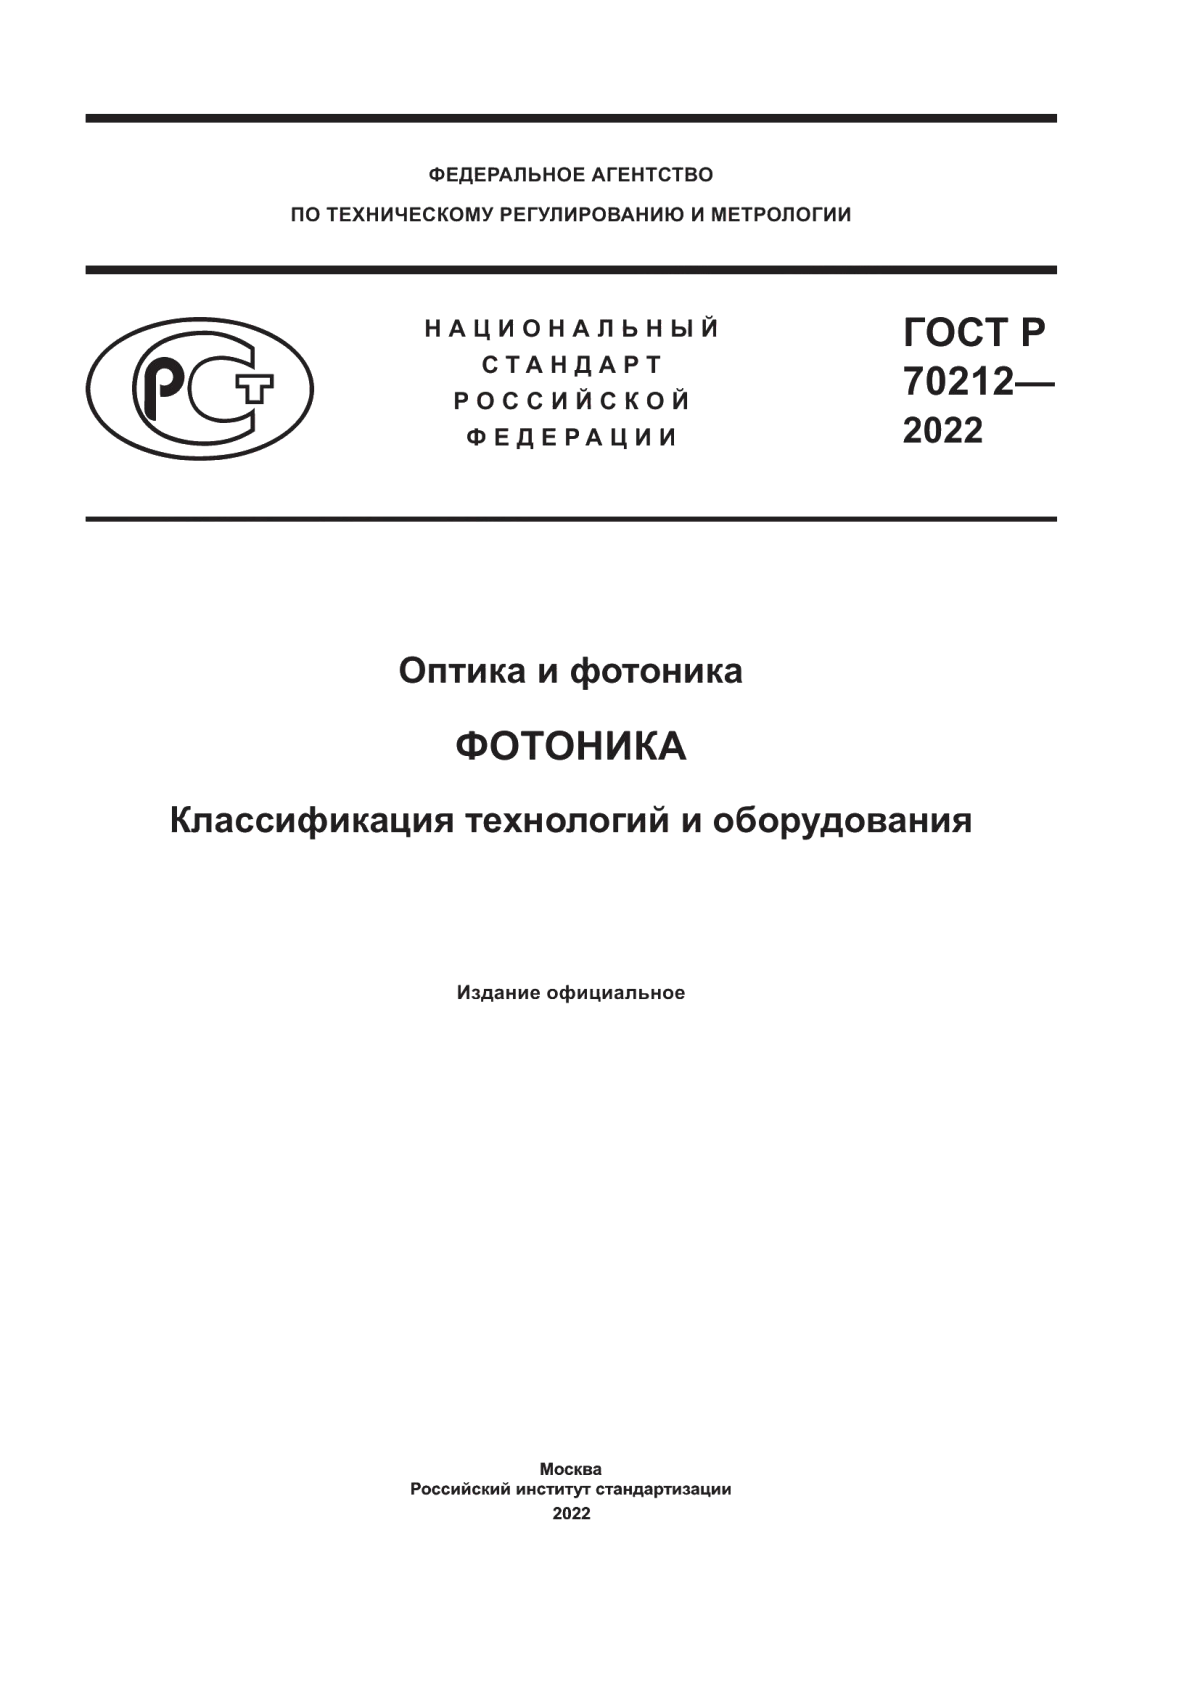 ГОСТ Р 70212-2022 Оптика и фотоника. Фотоника. Классификация технологий и оборудования